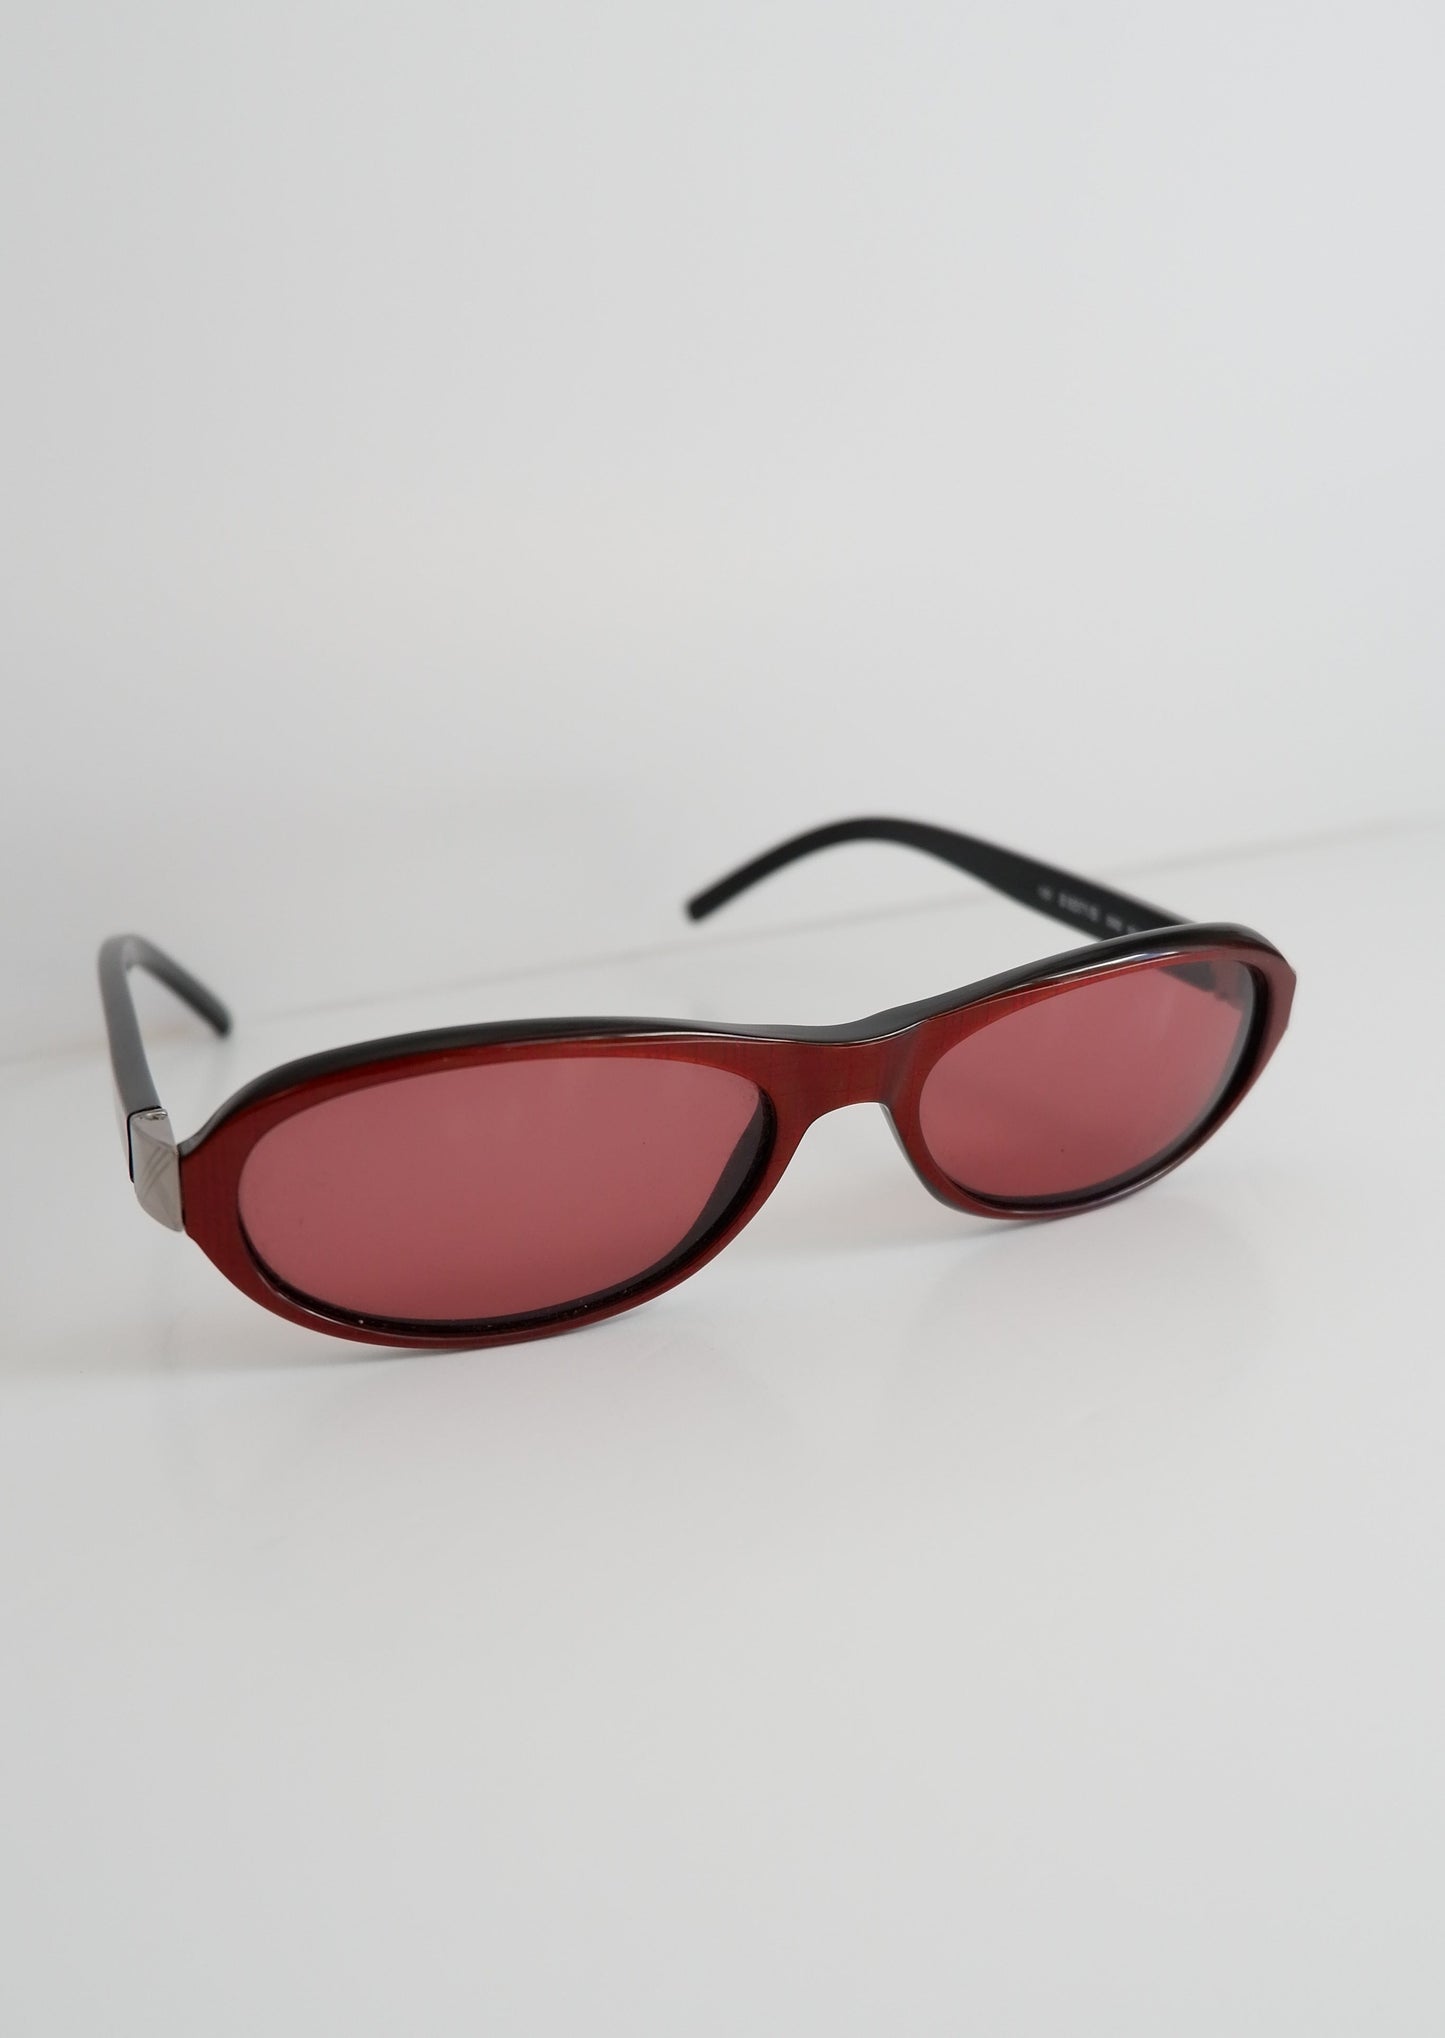 Authentic Preowned Burberry Red Acetate Novacheck Sunglasses